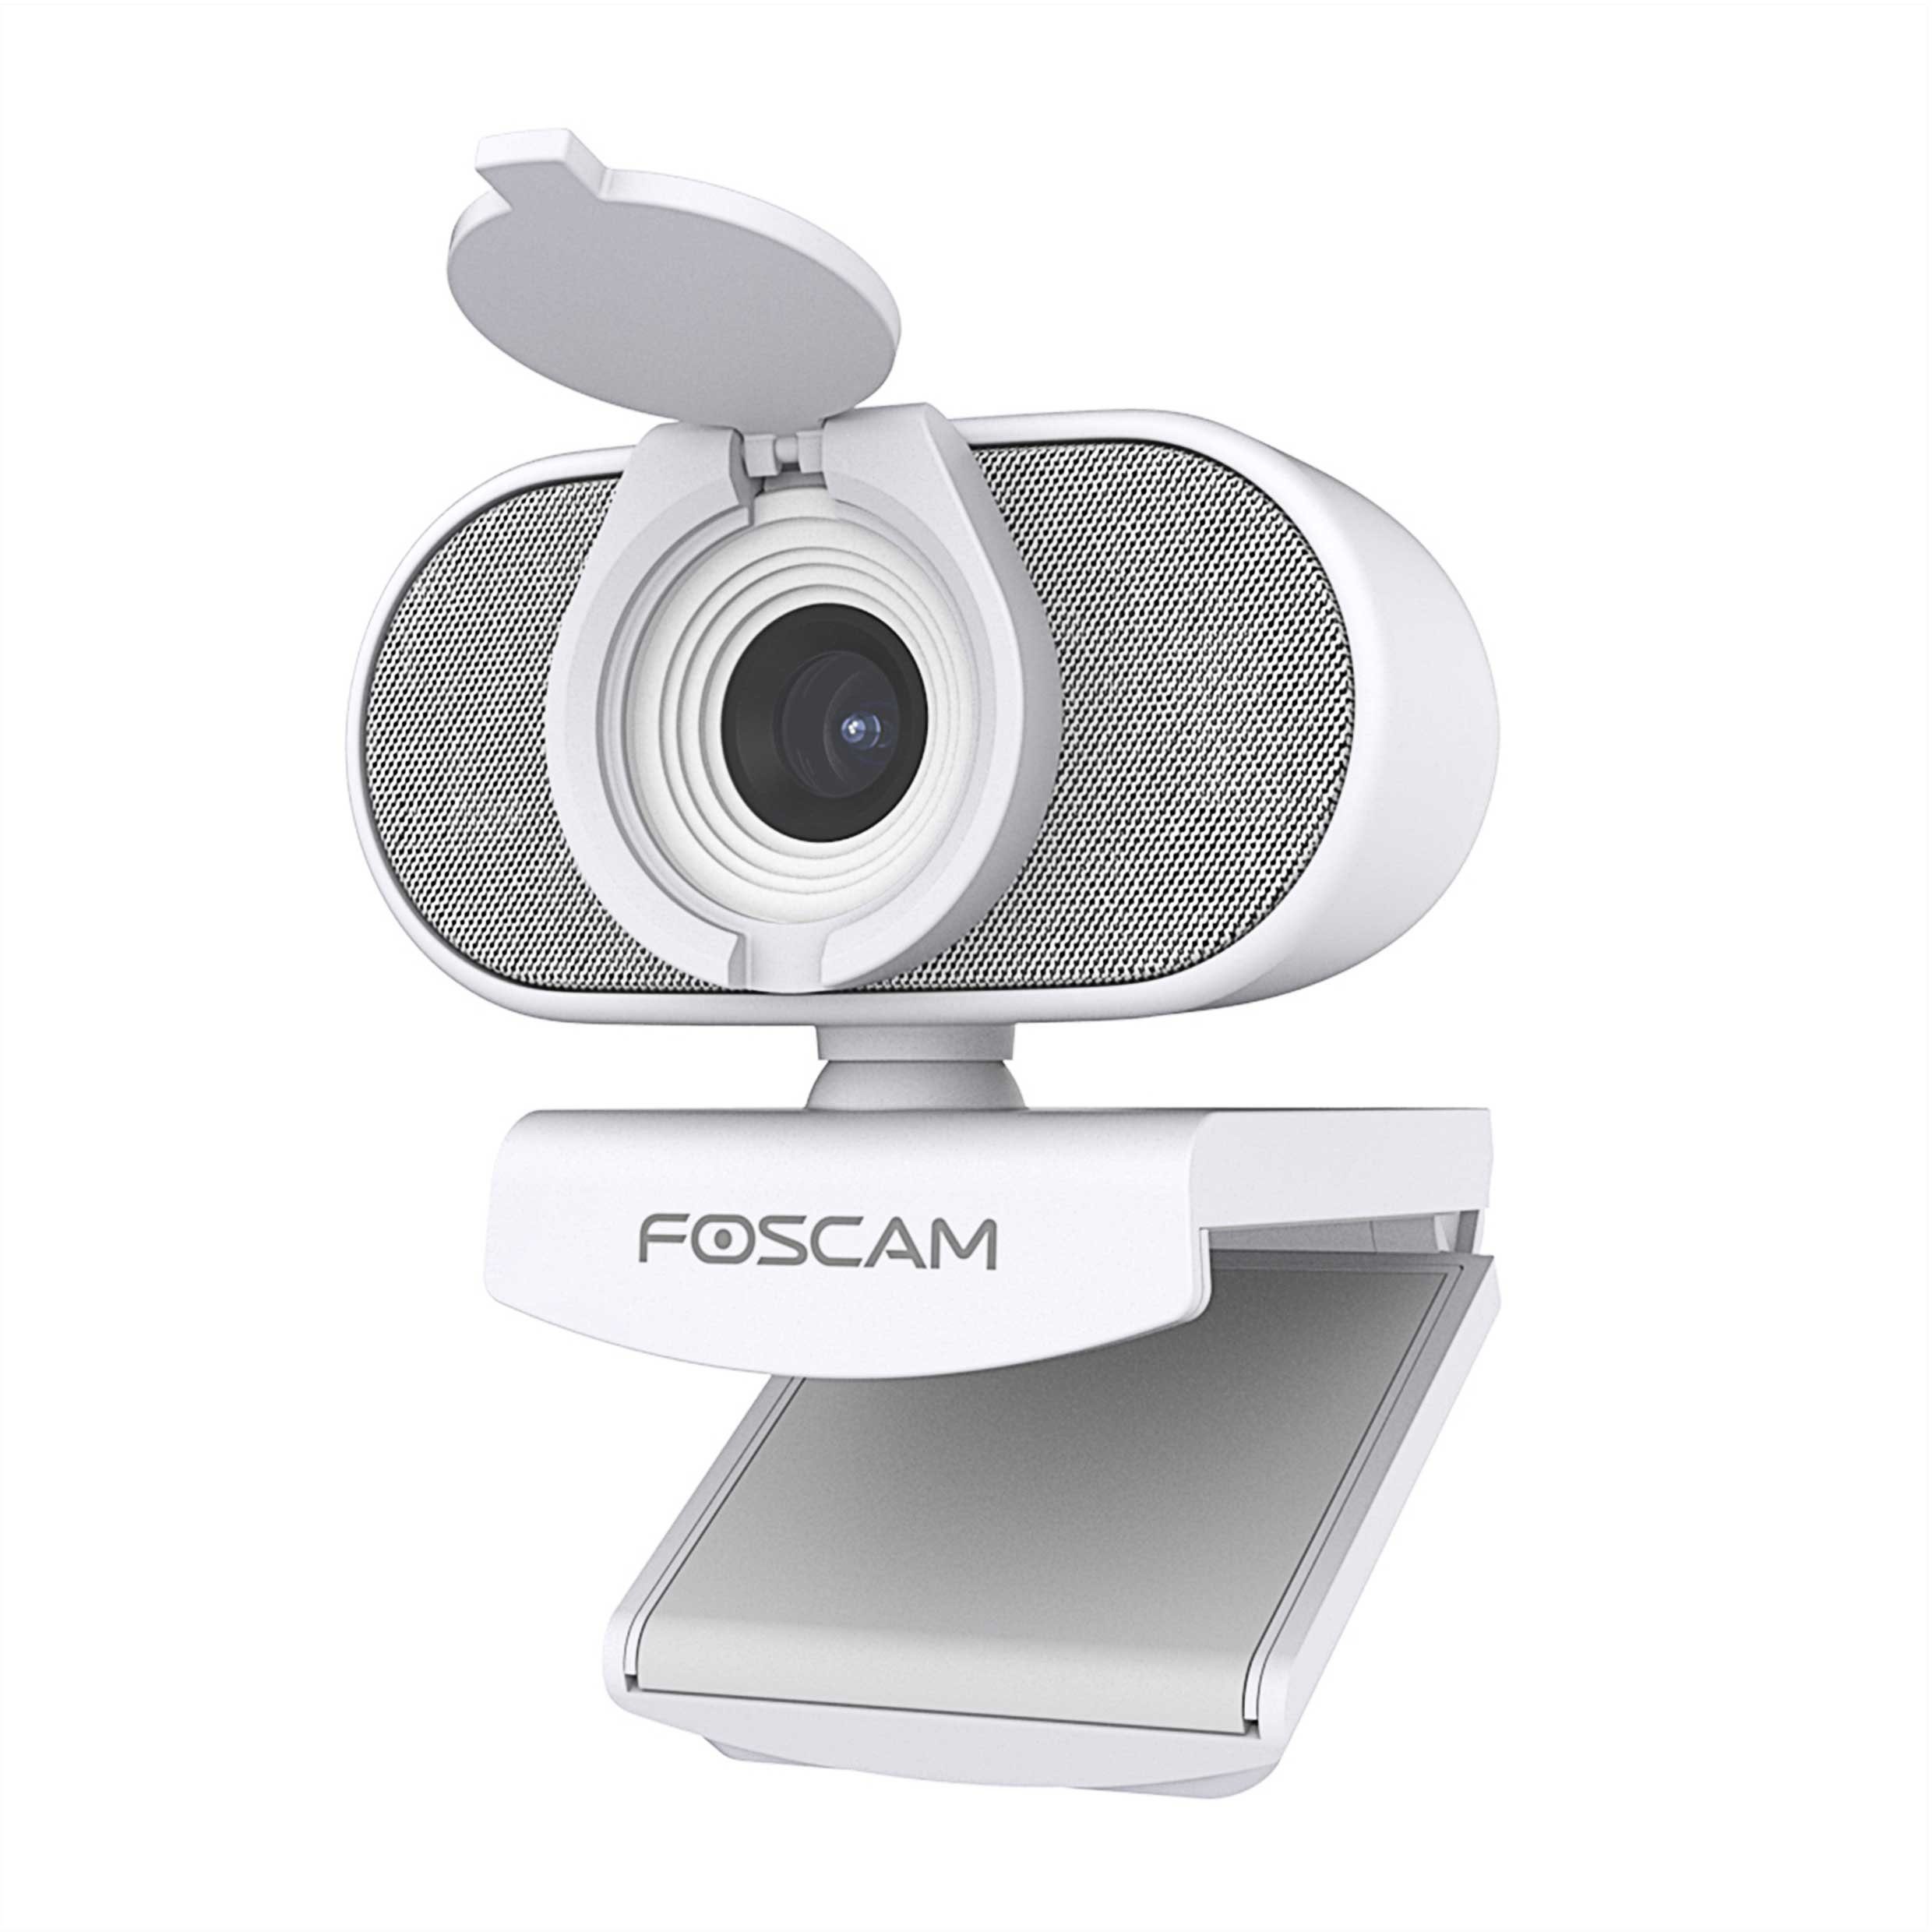 Foscam »W41 4 MP ULTRA HD USB« Webcam (SUPER HD, 84°-Weitwinkel-Objektiv,  Integriertes Mikrofon, USB Plug & Play, Sichtschutzabdeckung, Vielseitige  Platzierung)